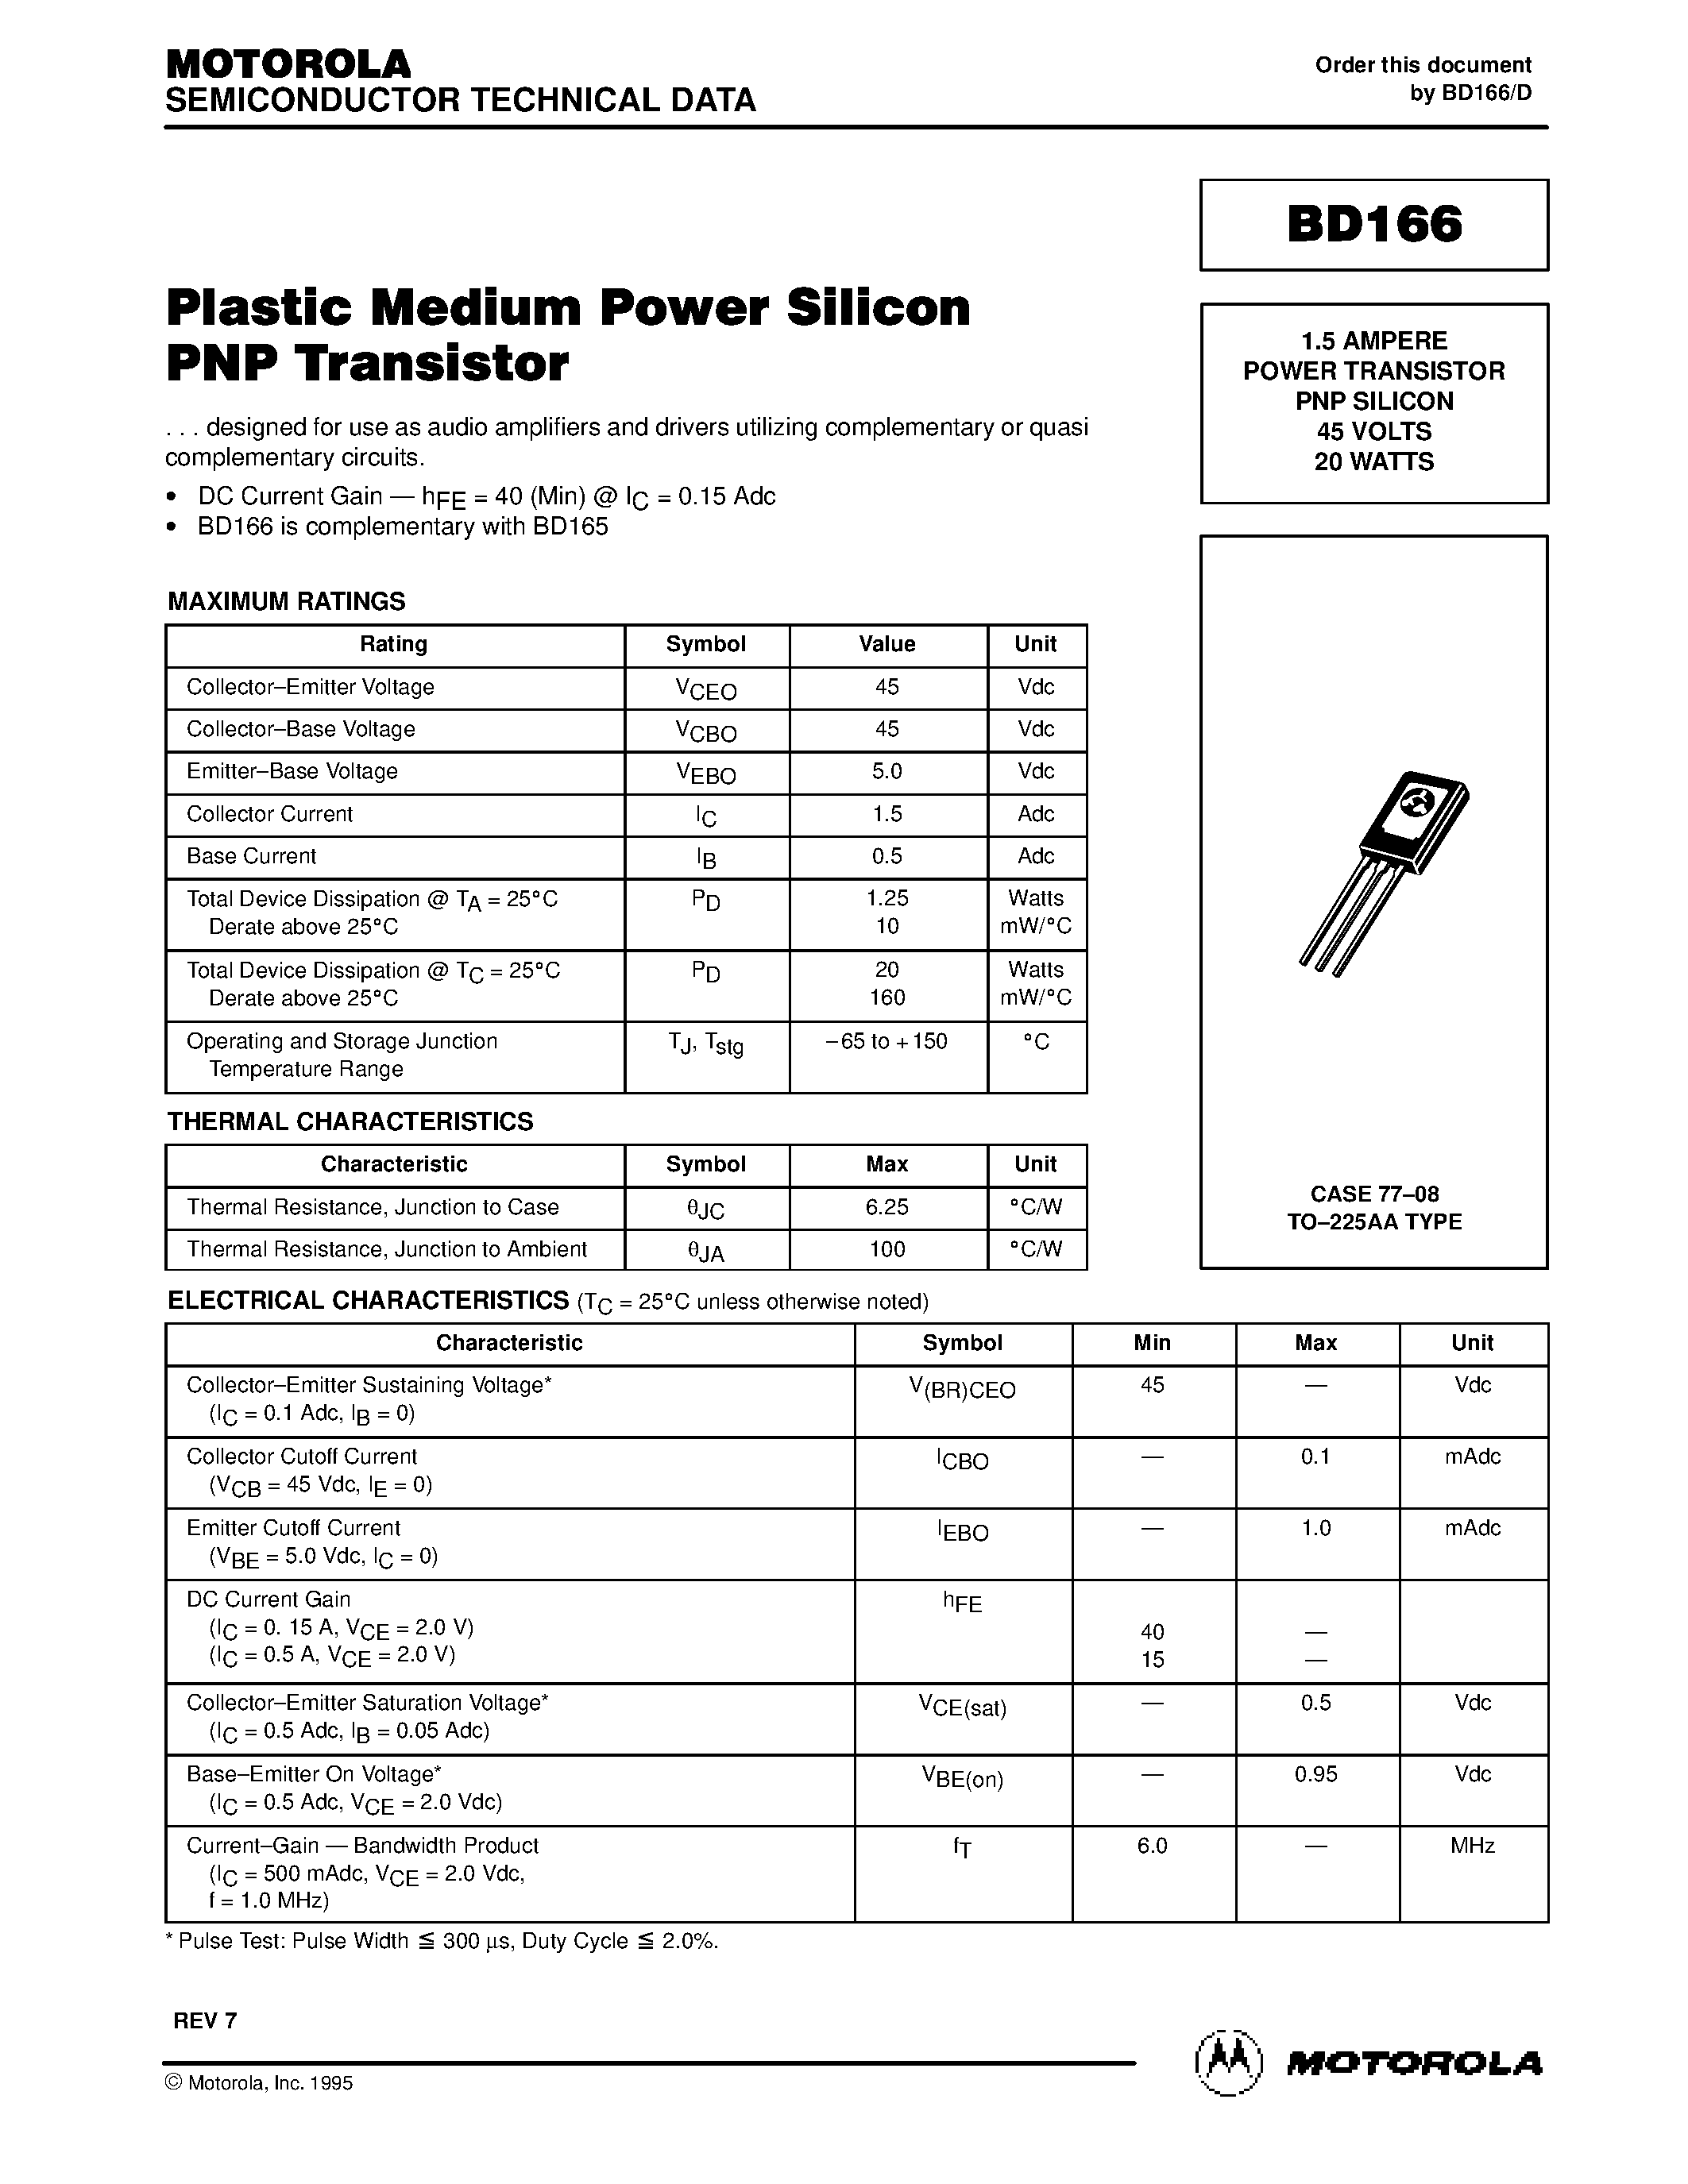 Даташит BD166 - Plastic Medium Power Silicon PNP Transistor страница 1